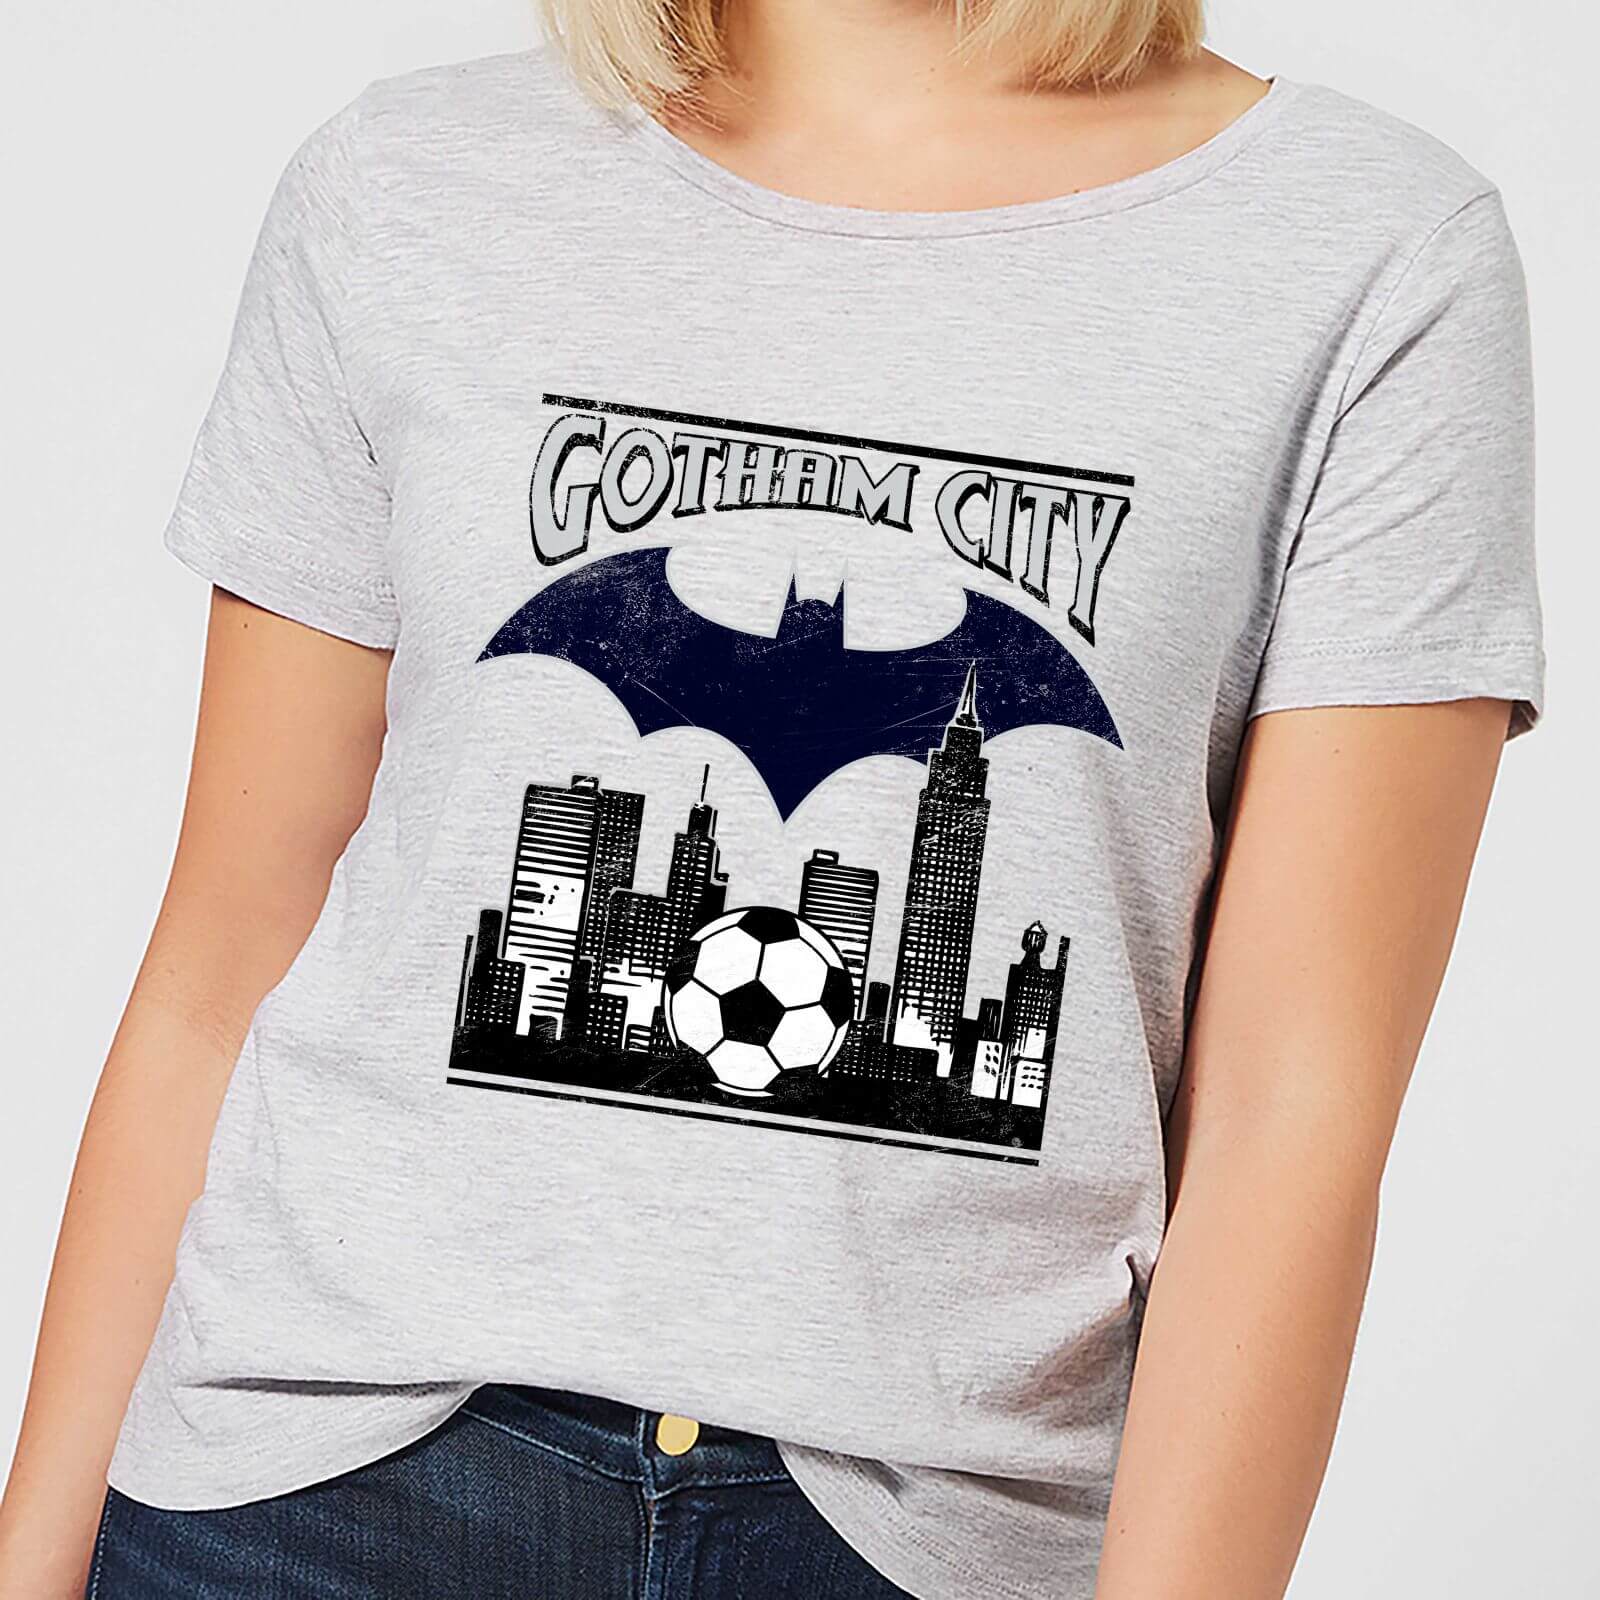 t-shirt dc comics batman football gotham city - grigio - donna - s - grigio